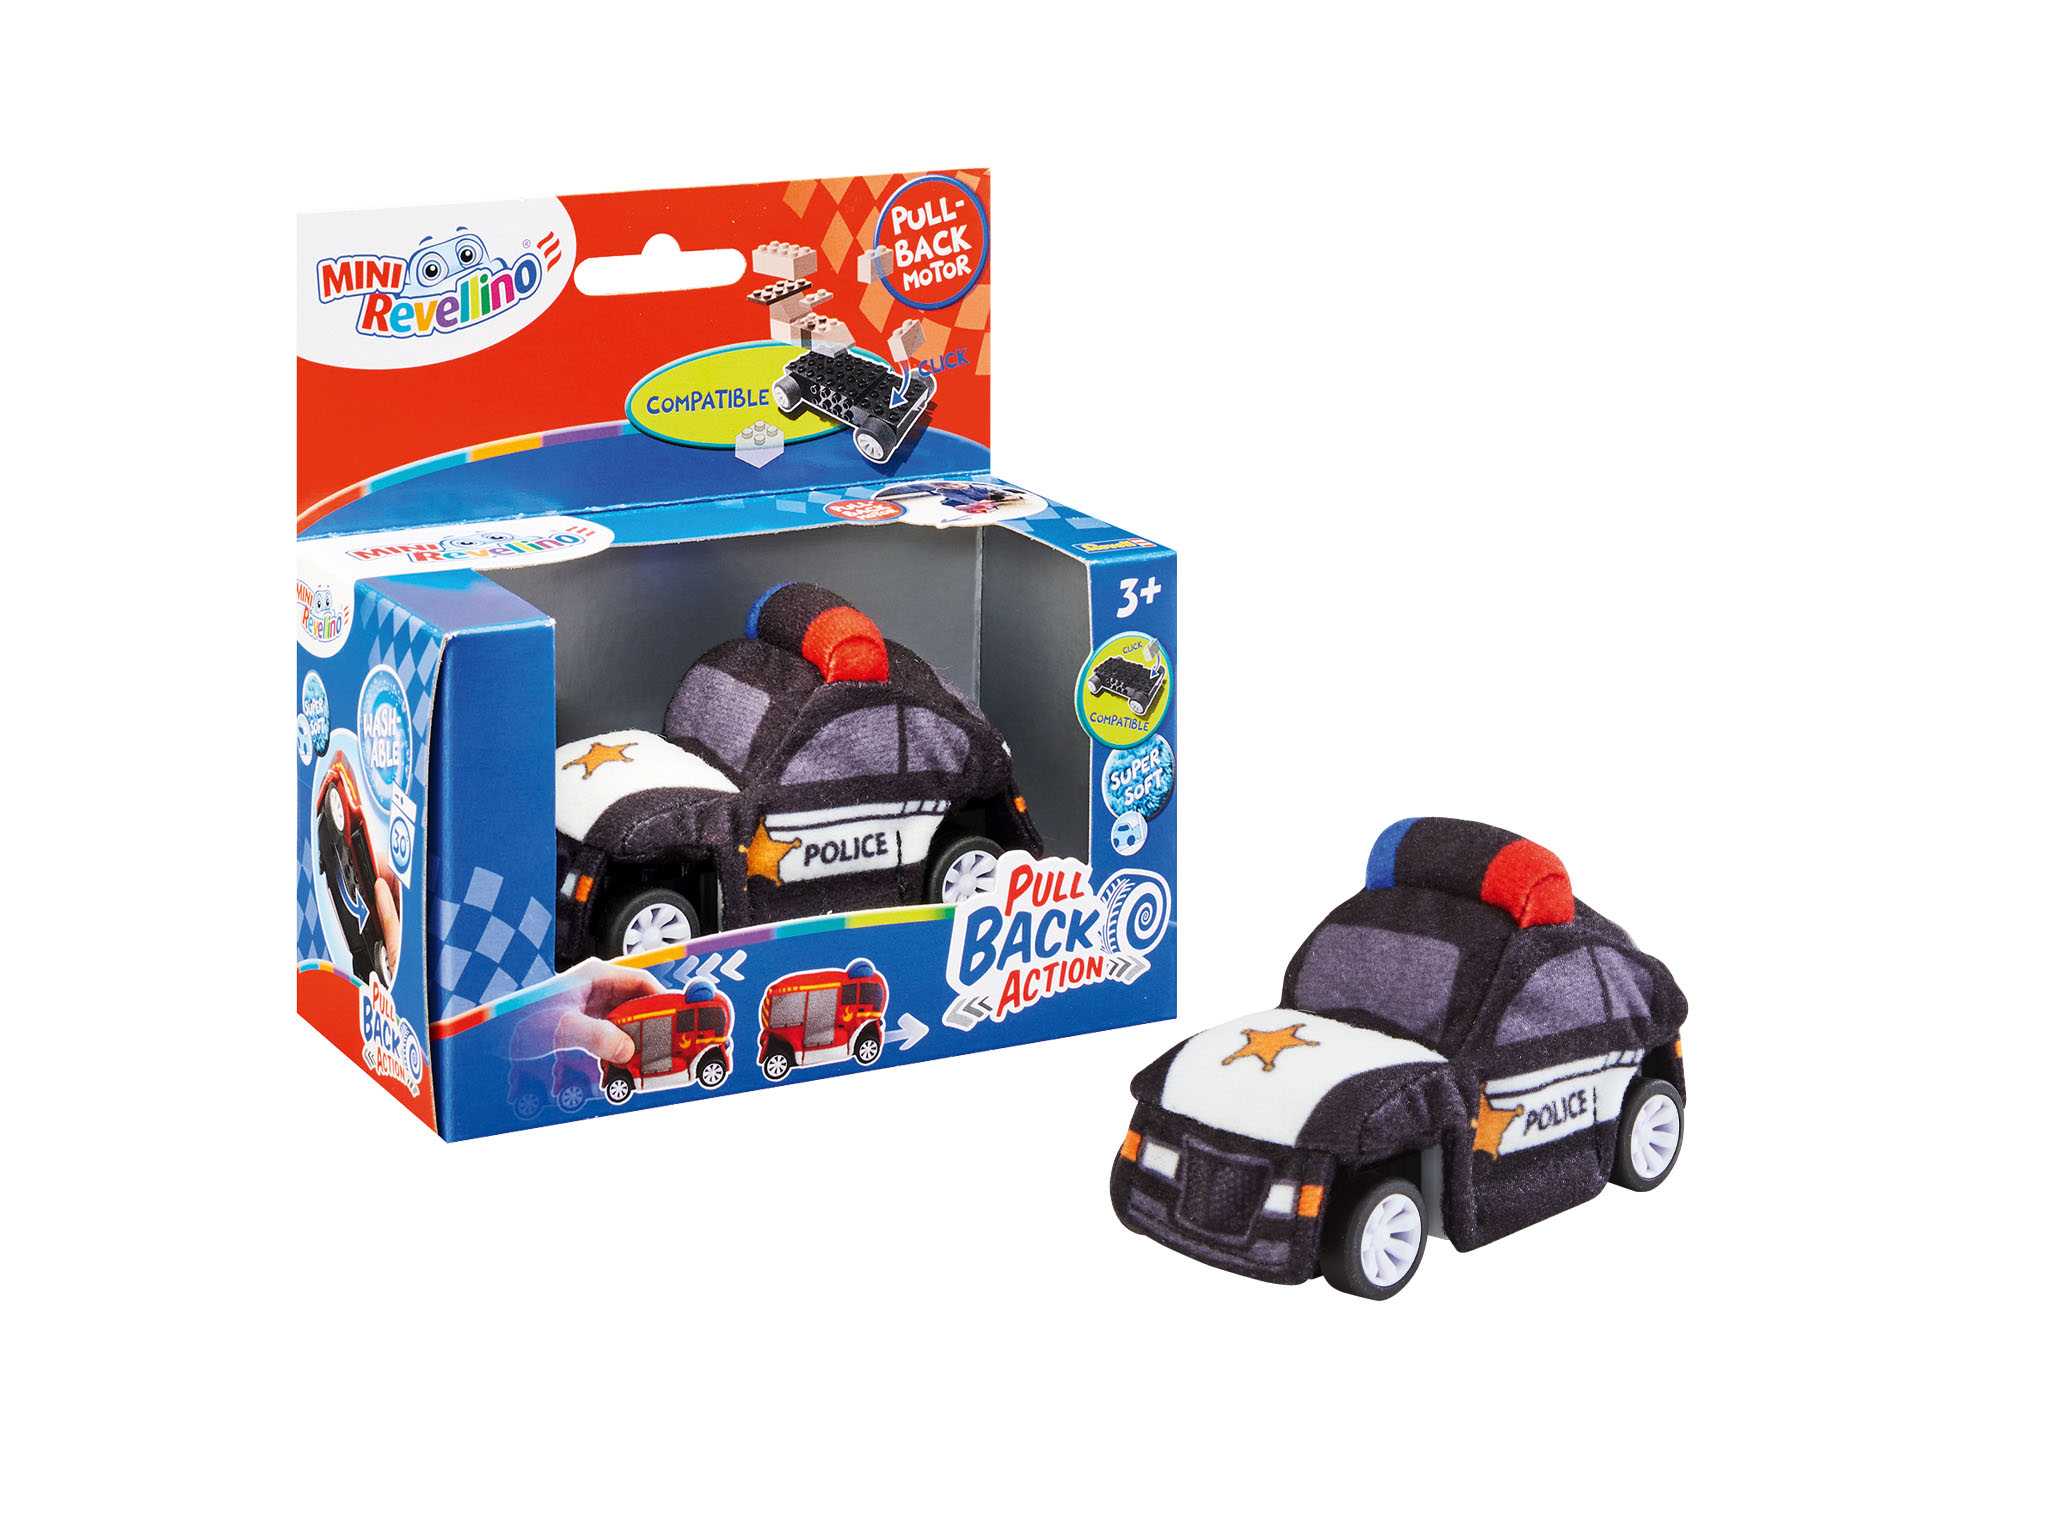 MiniRevell 23198 - Police Car